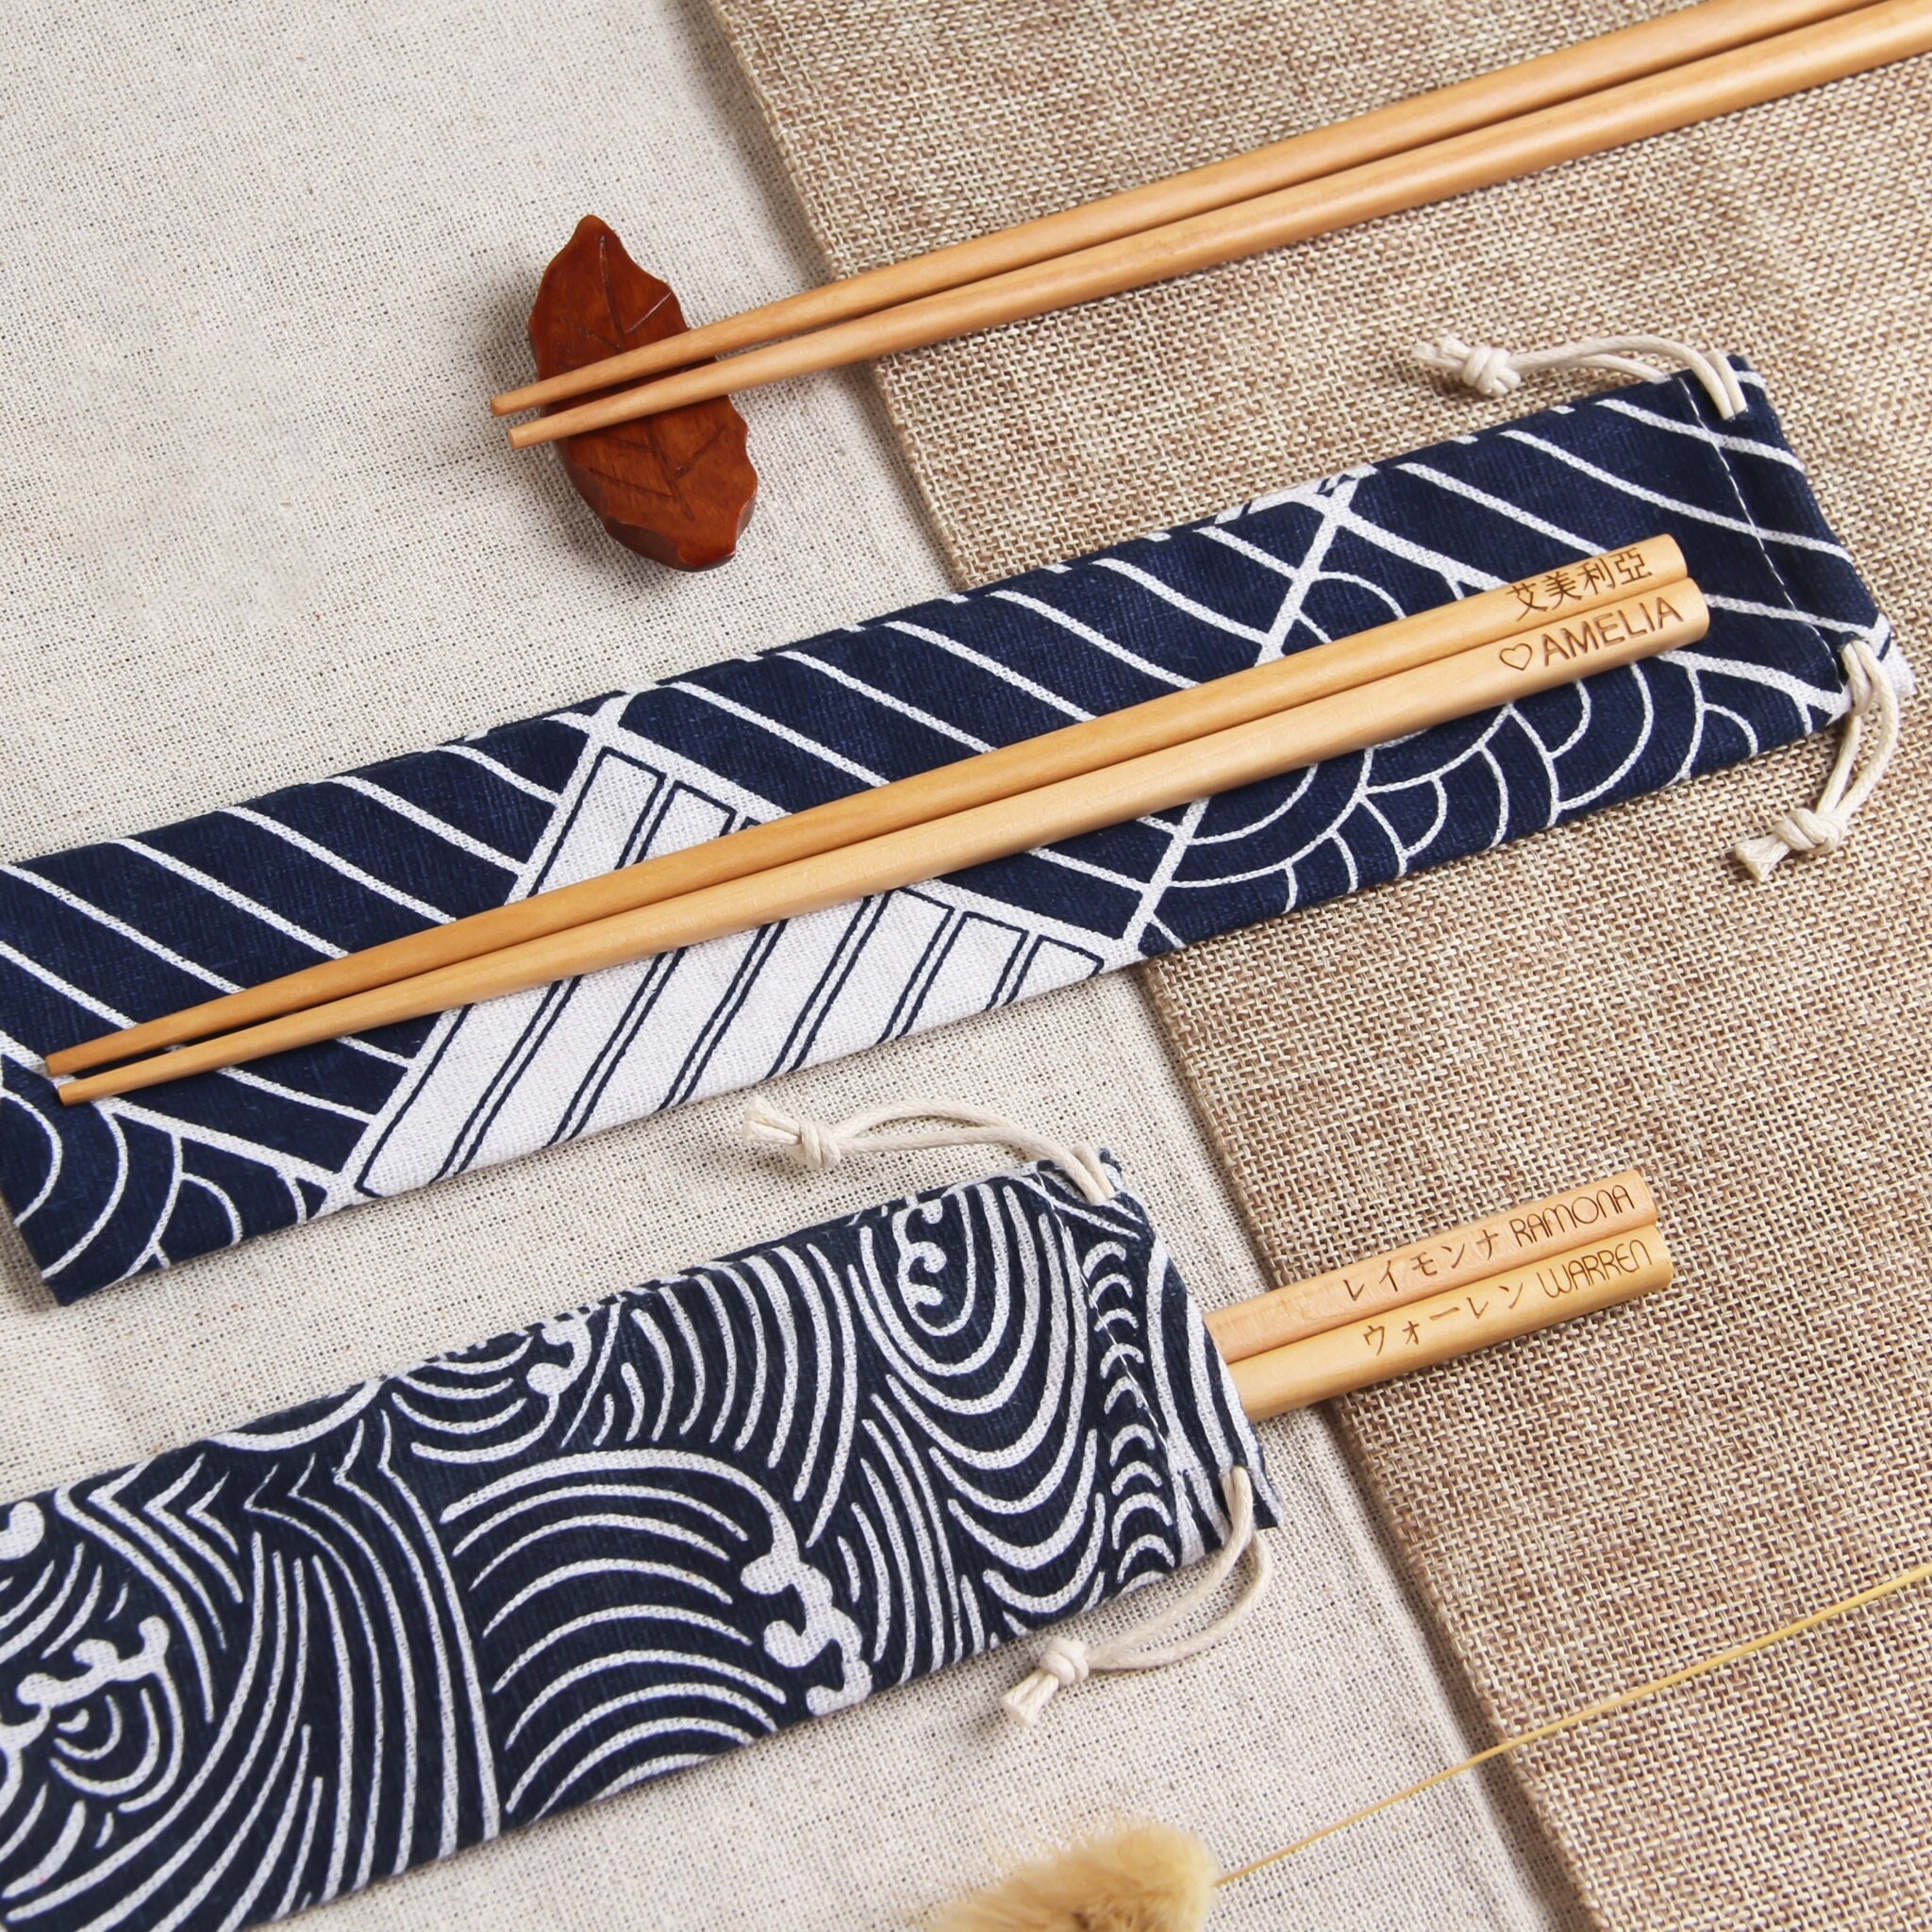 Personalised Sushi Gift Set. Serving Board & Reusable Chopsticks